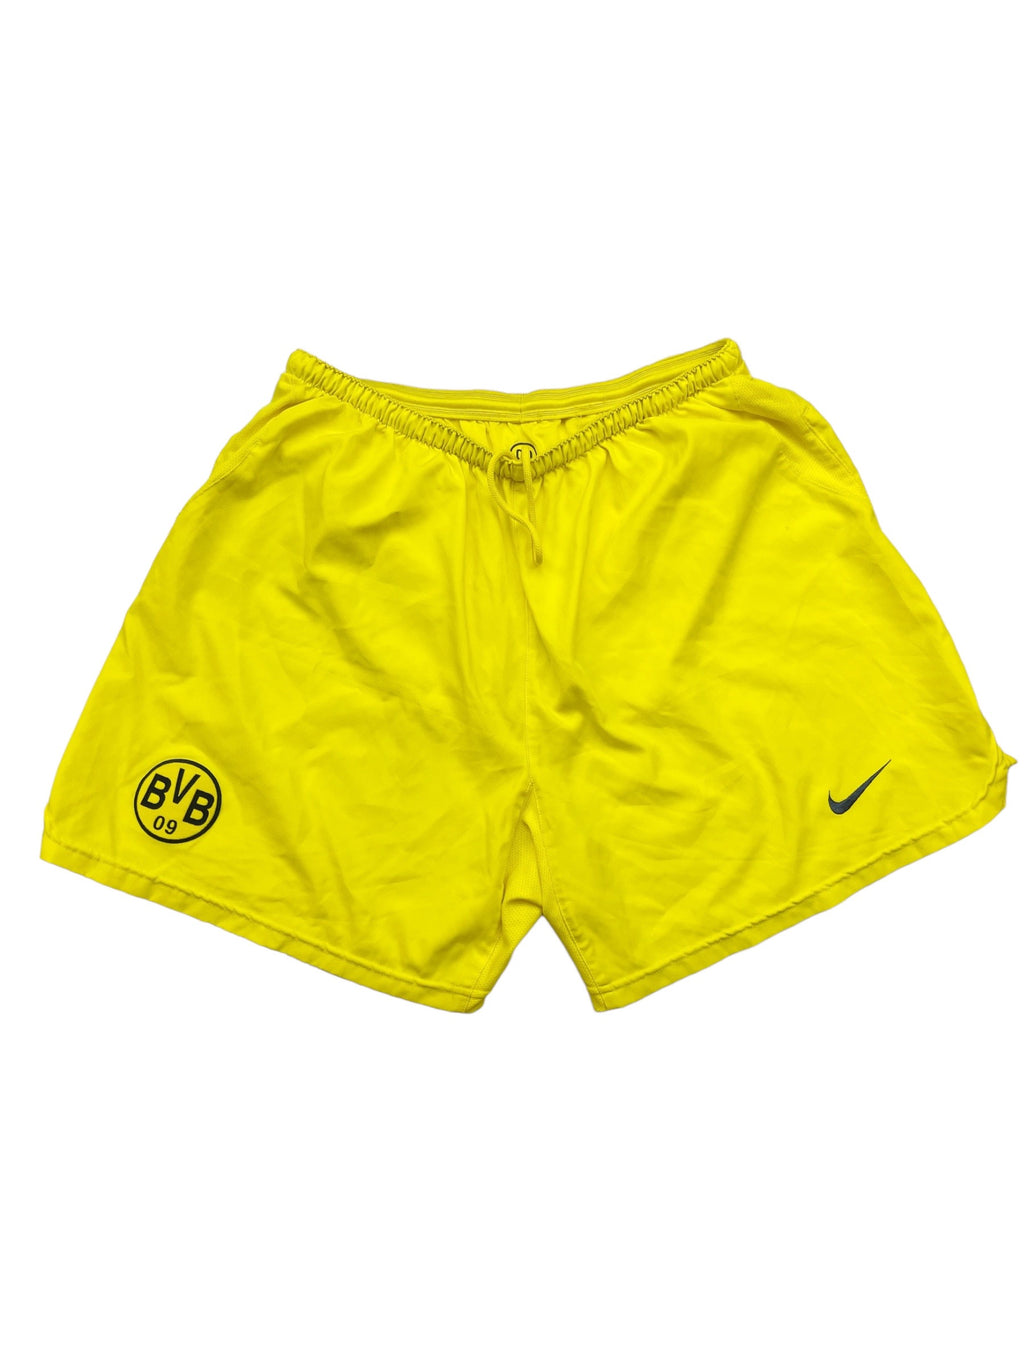 2004/05 Borussia Dortmund Away Shorts (XL) 9/10